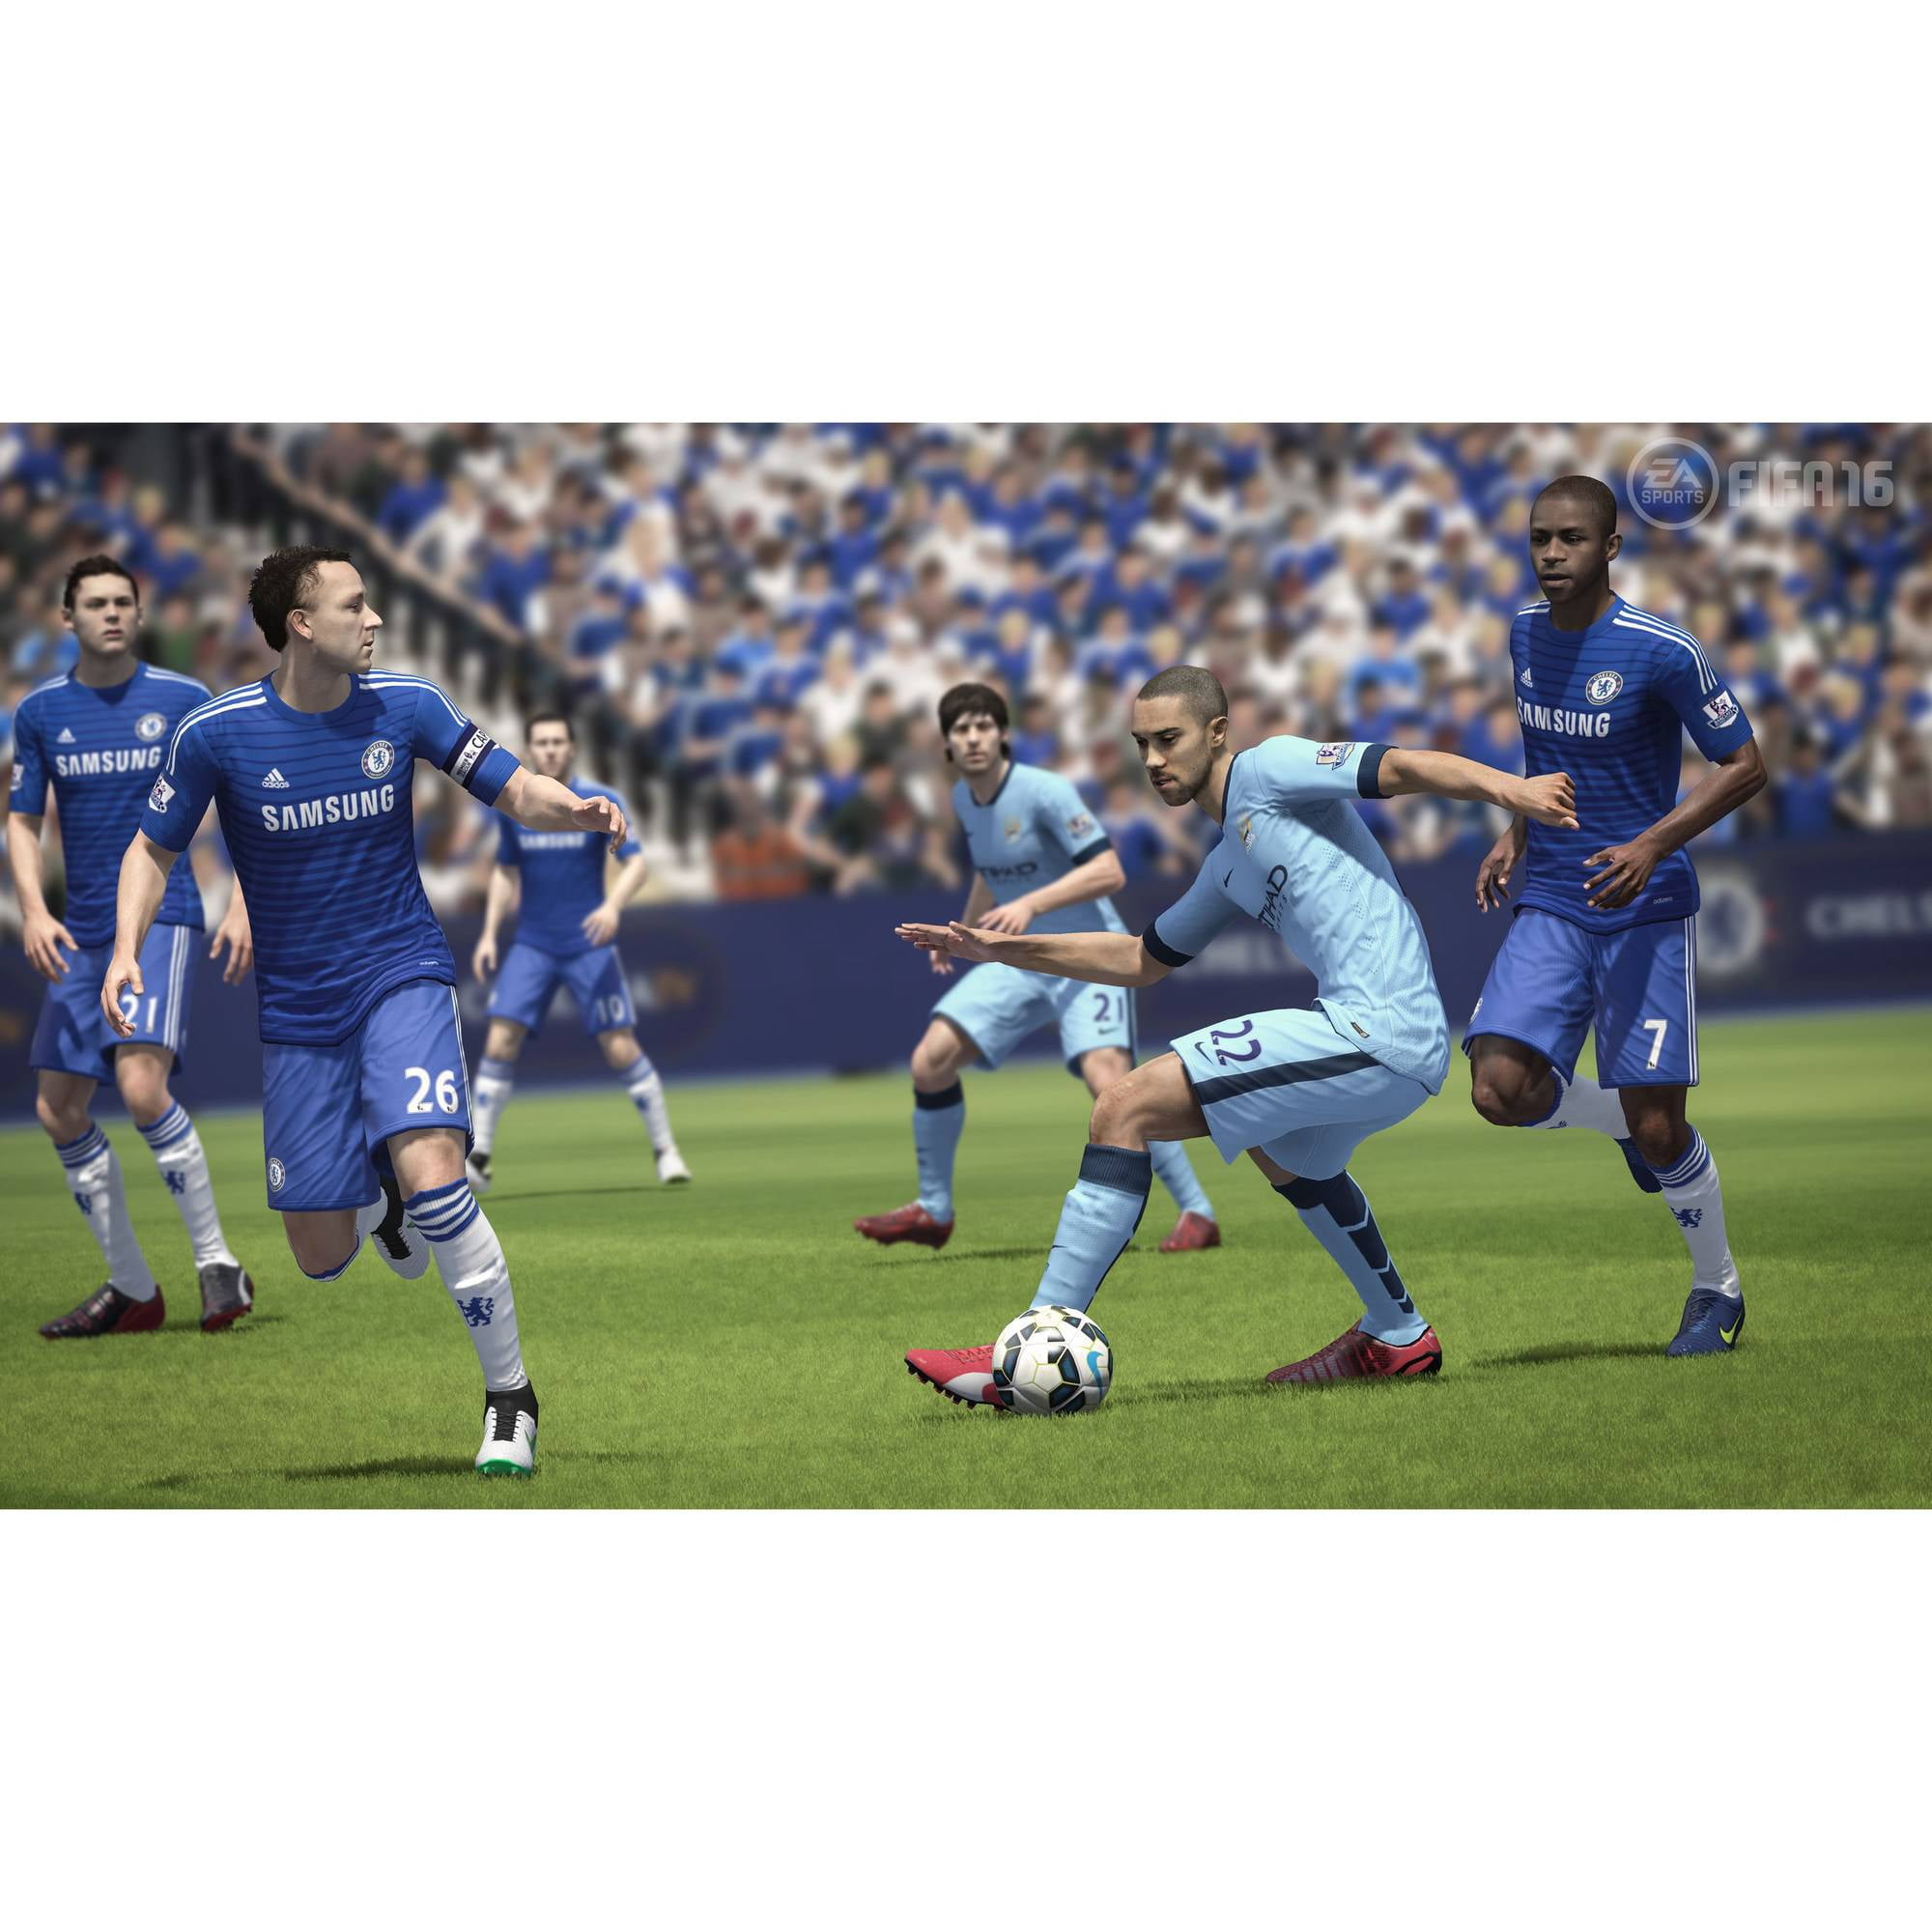 FIFA-16-Jogos-Slshop-PS3 - SL Shop - A melhor loja de smartphones, games,  acessórios e assistência técnica